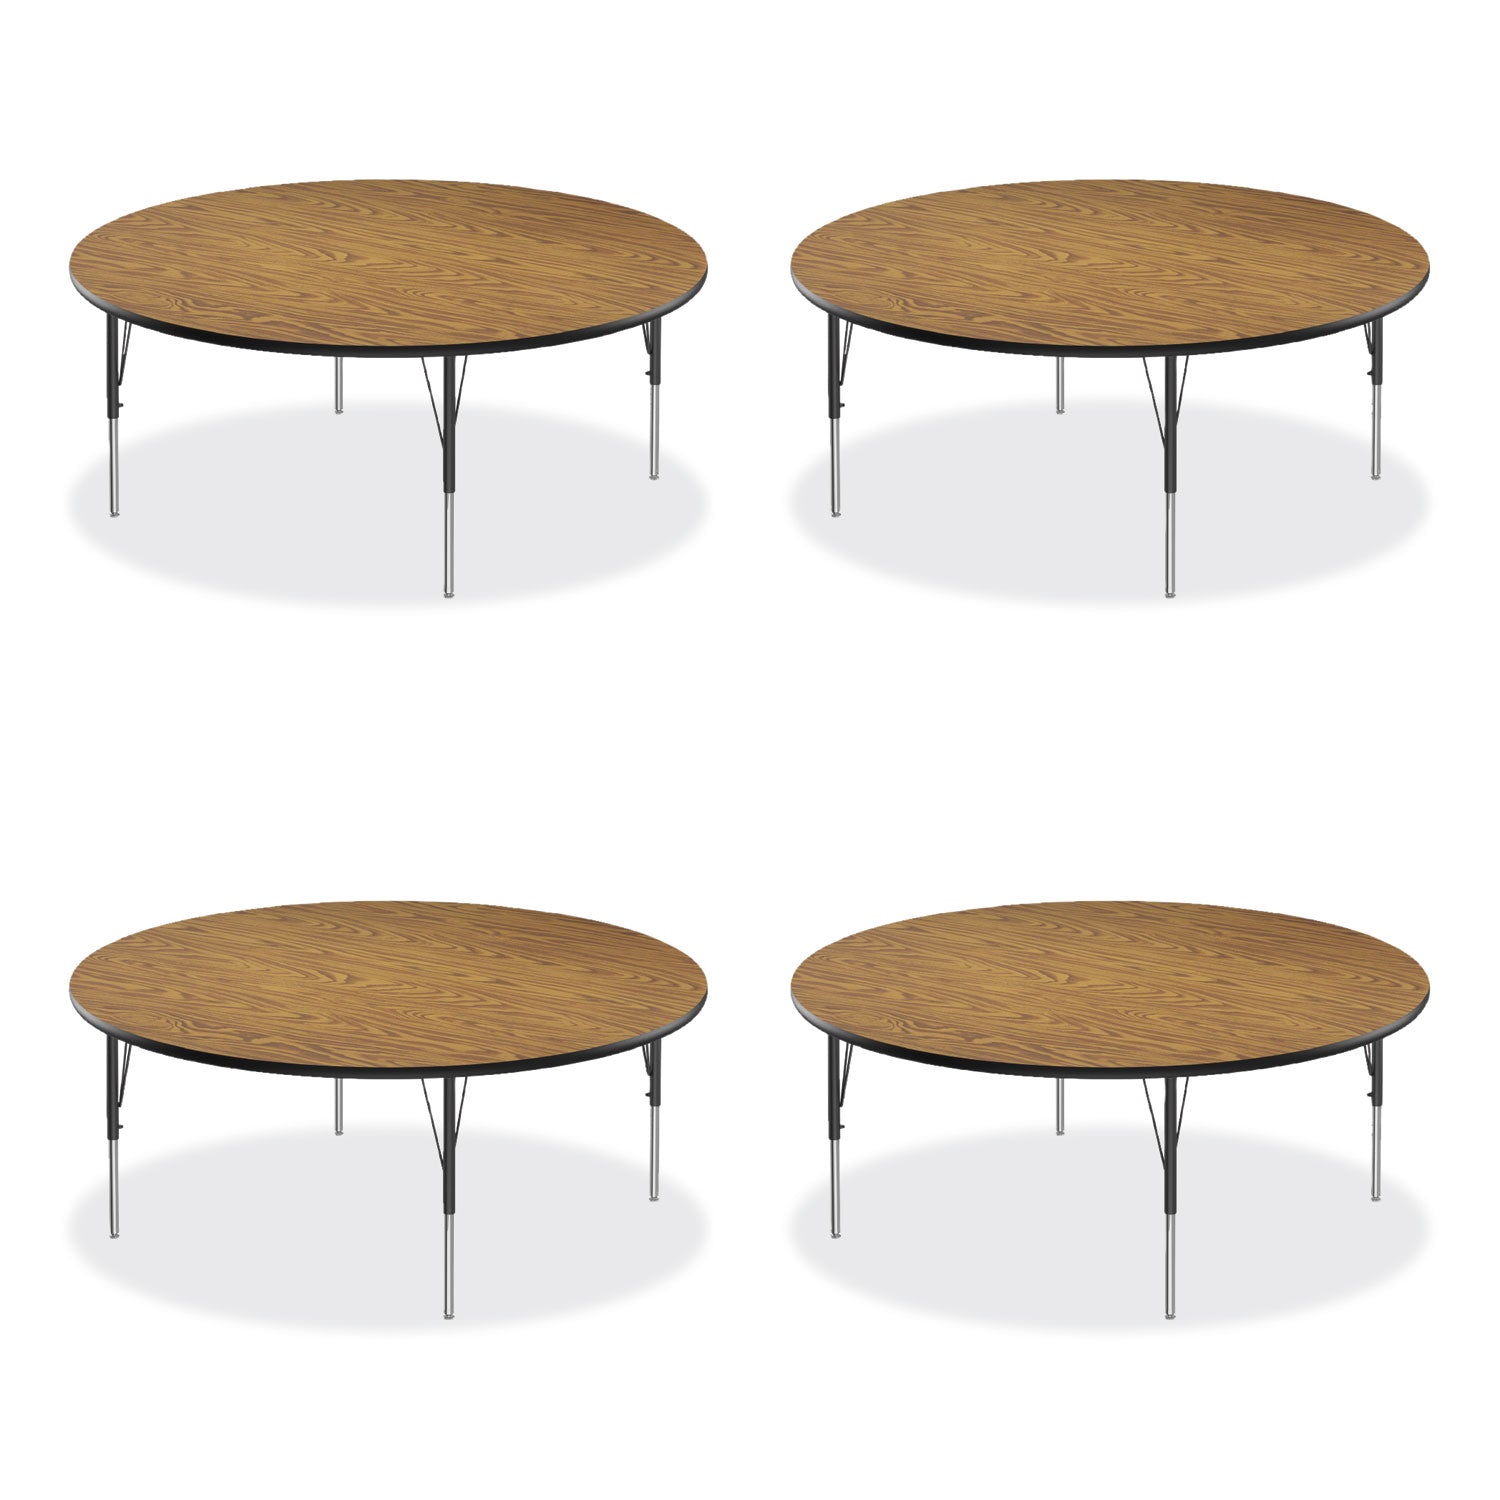 Height Adjustable Activity Tables, Round, 60" x 19" to 29", Medium Oak Top, Black Legs, 4/Pallet Flipcost Flipcost